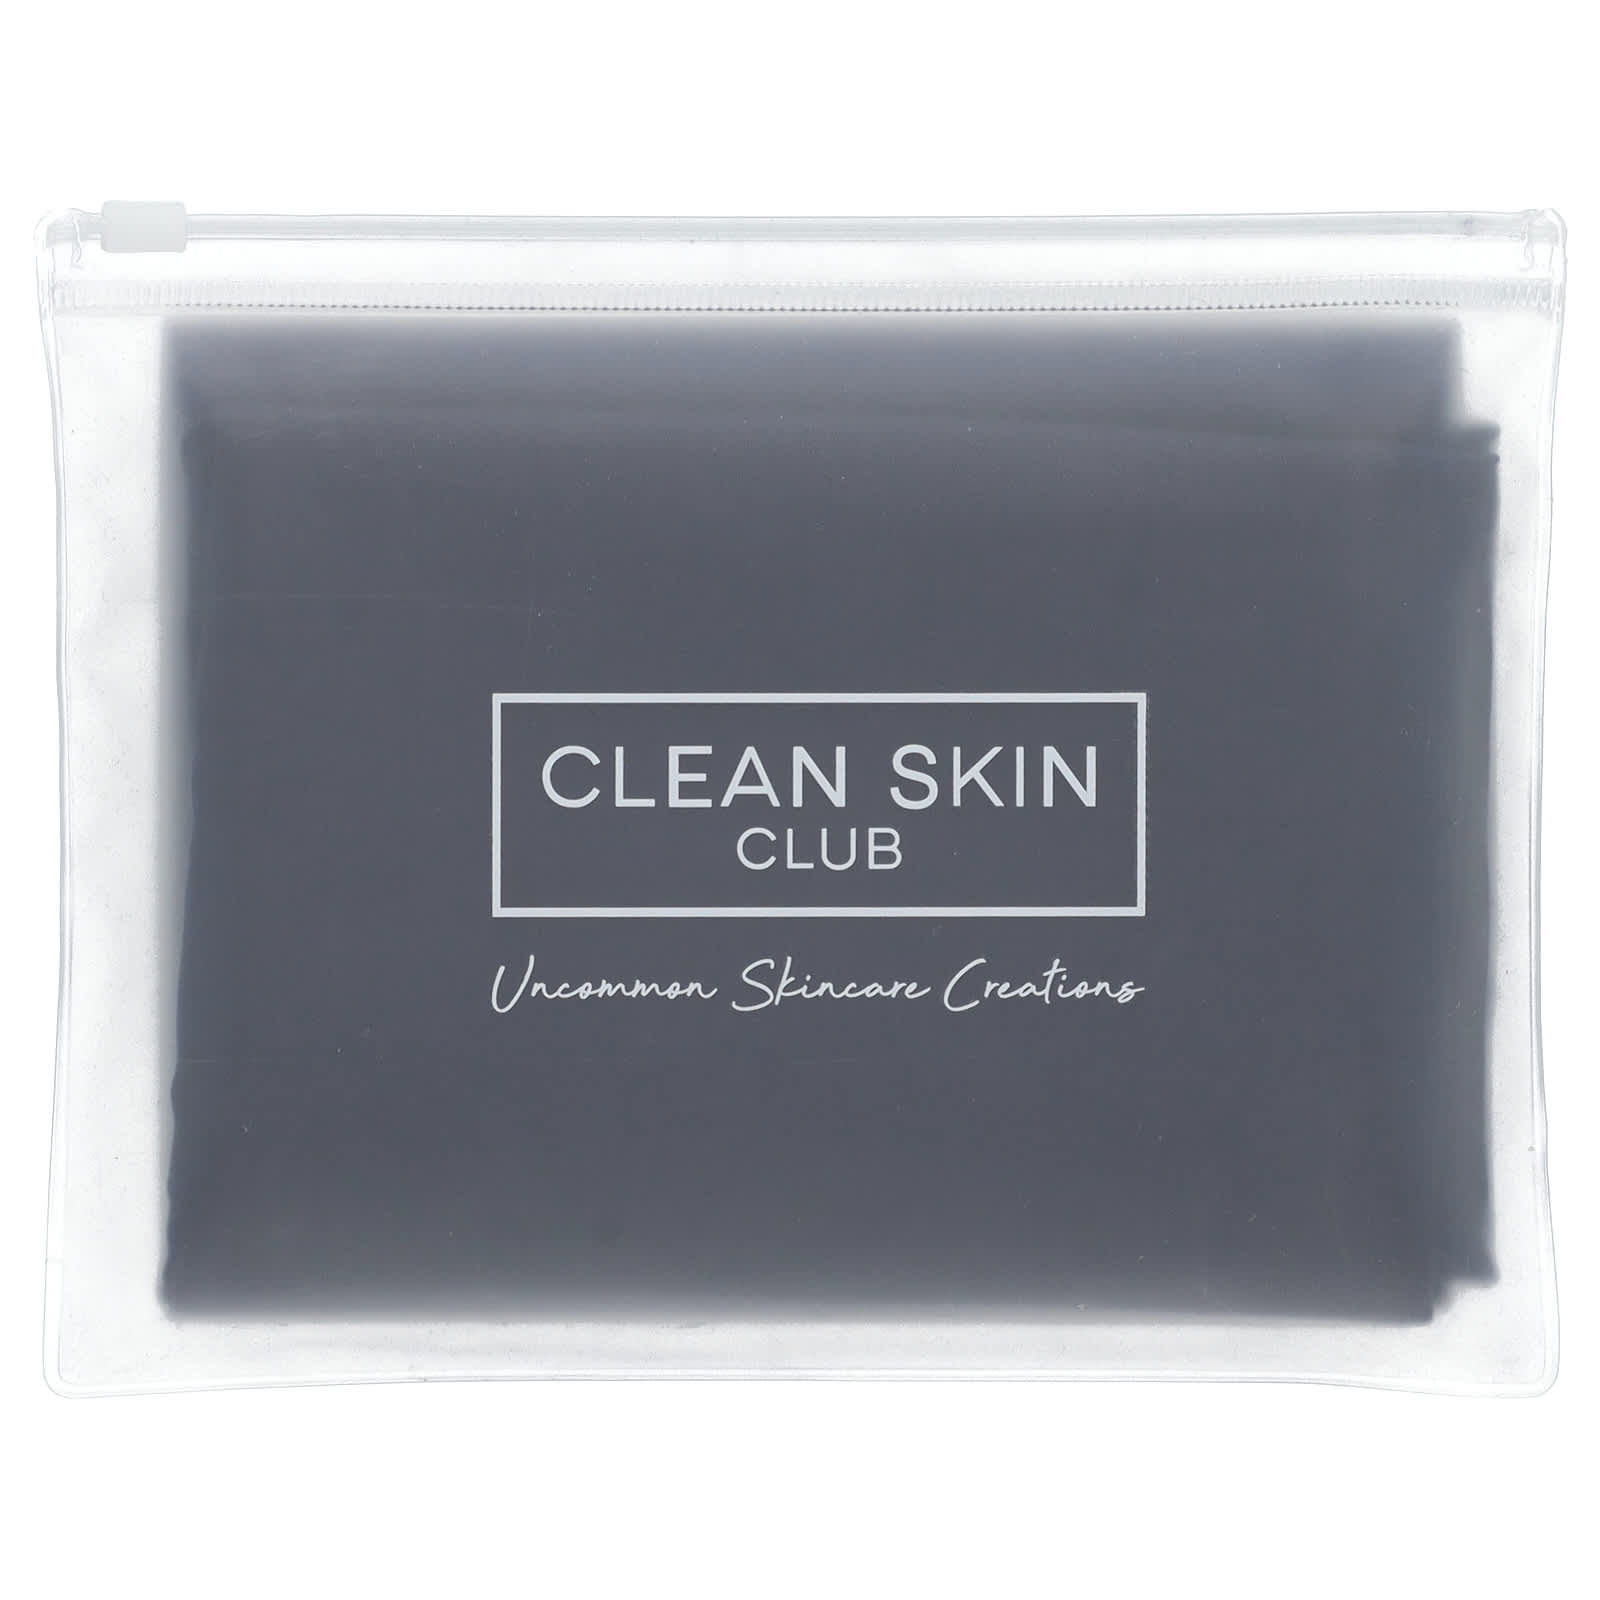 Clean Skin Club  Uncommon Skincare Creations